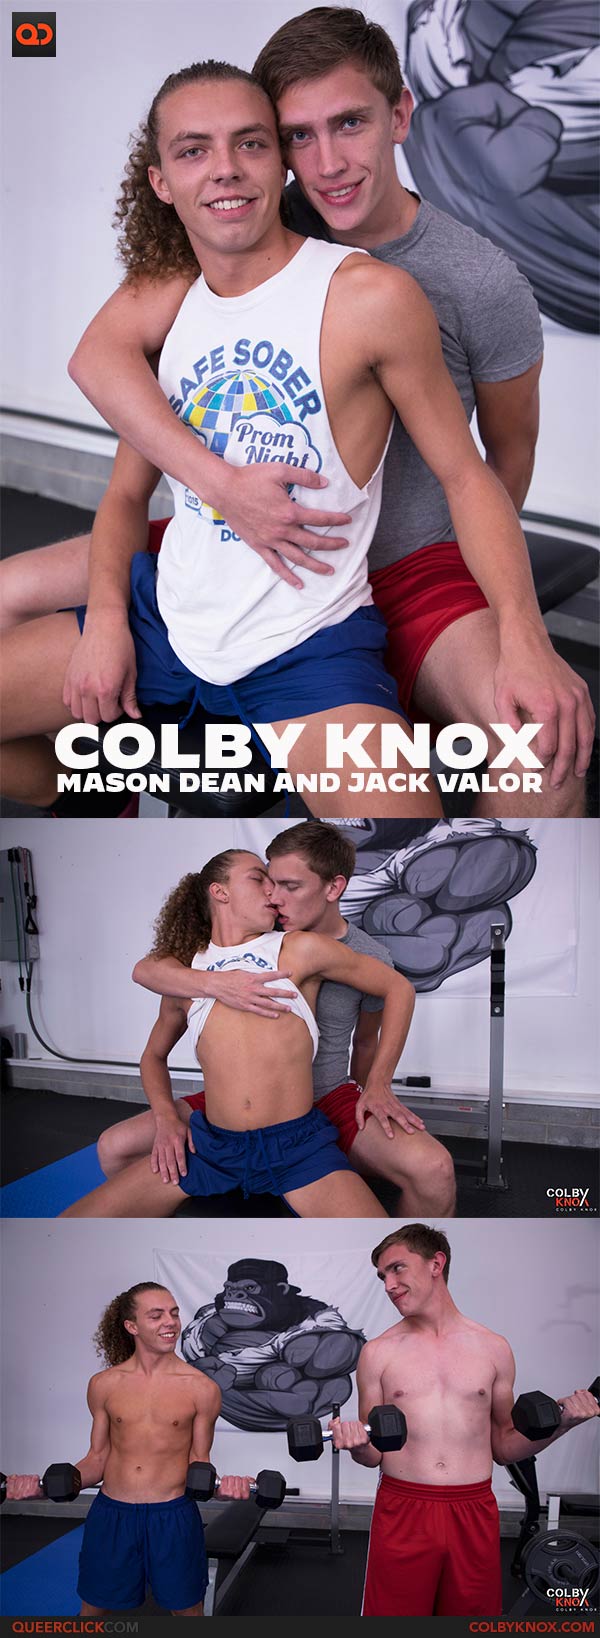 Colby Knox: Mason Dean and Jack Valor